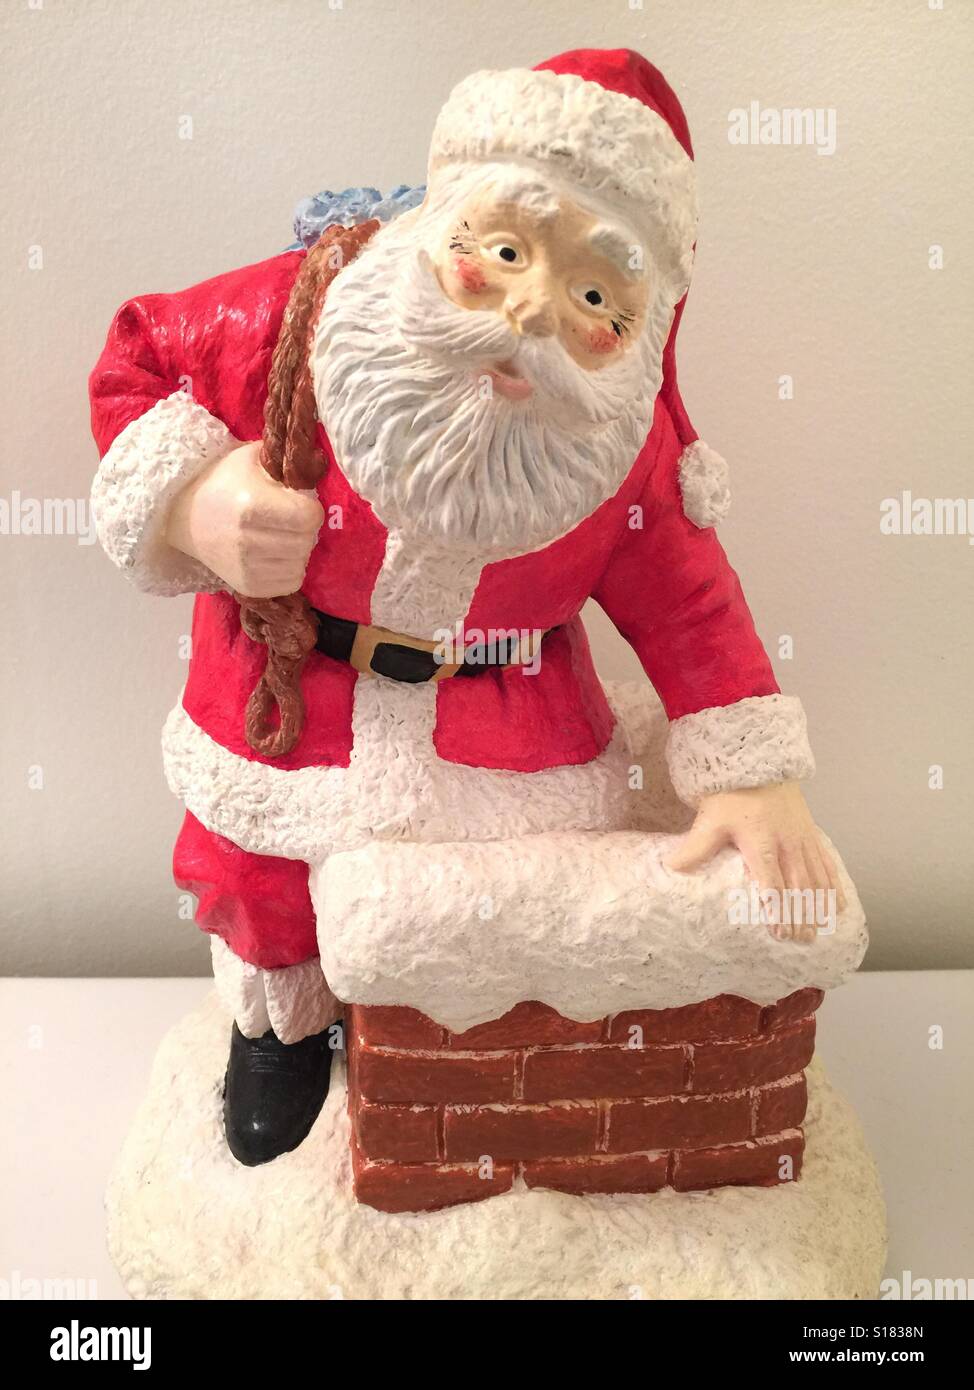 A Santa Claus figurine against a white background Stock Photo